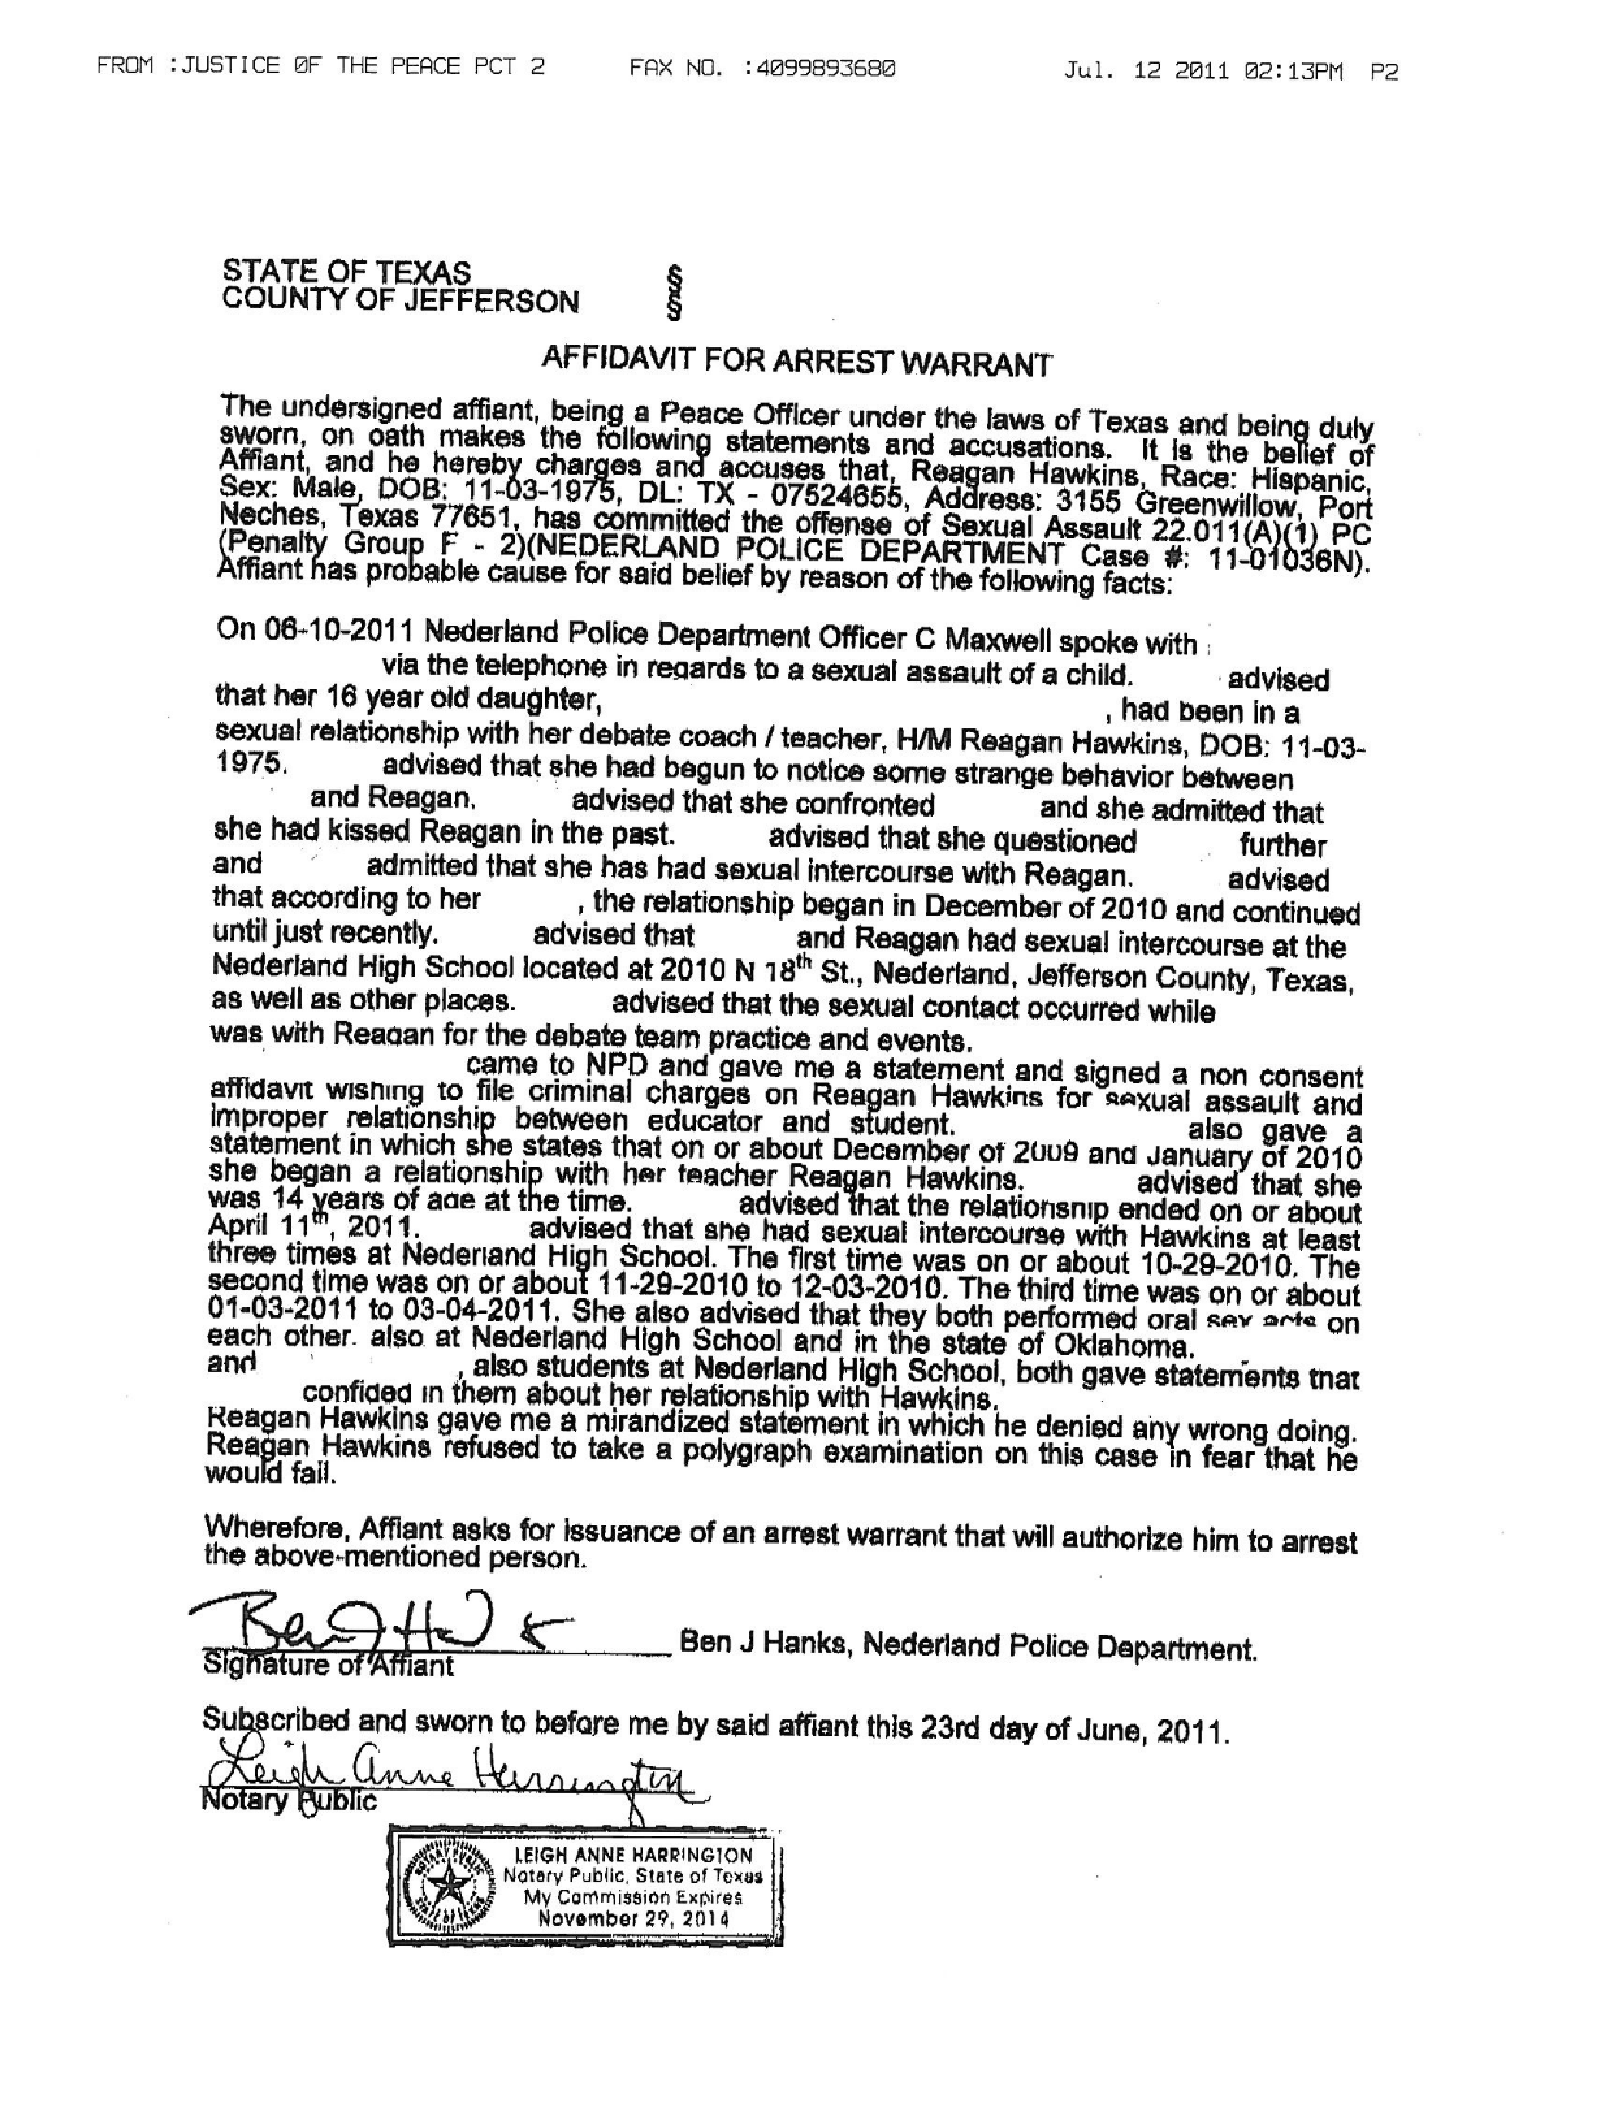 Hawkins Reagan affidavit for arrest warrant.png